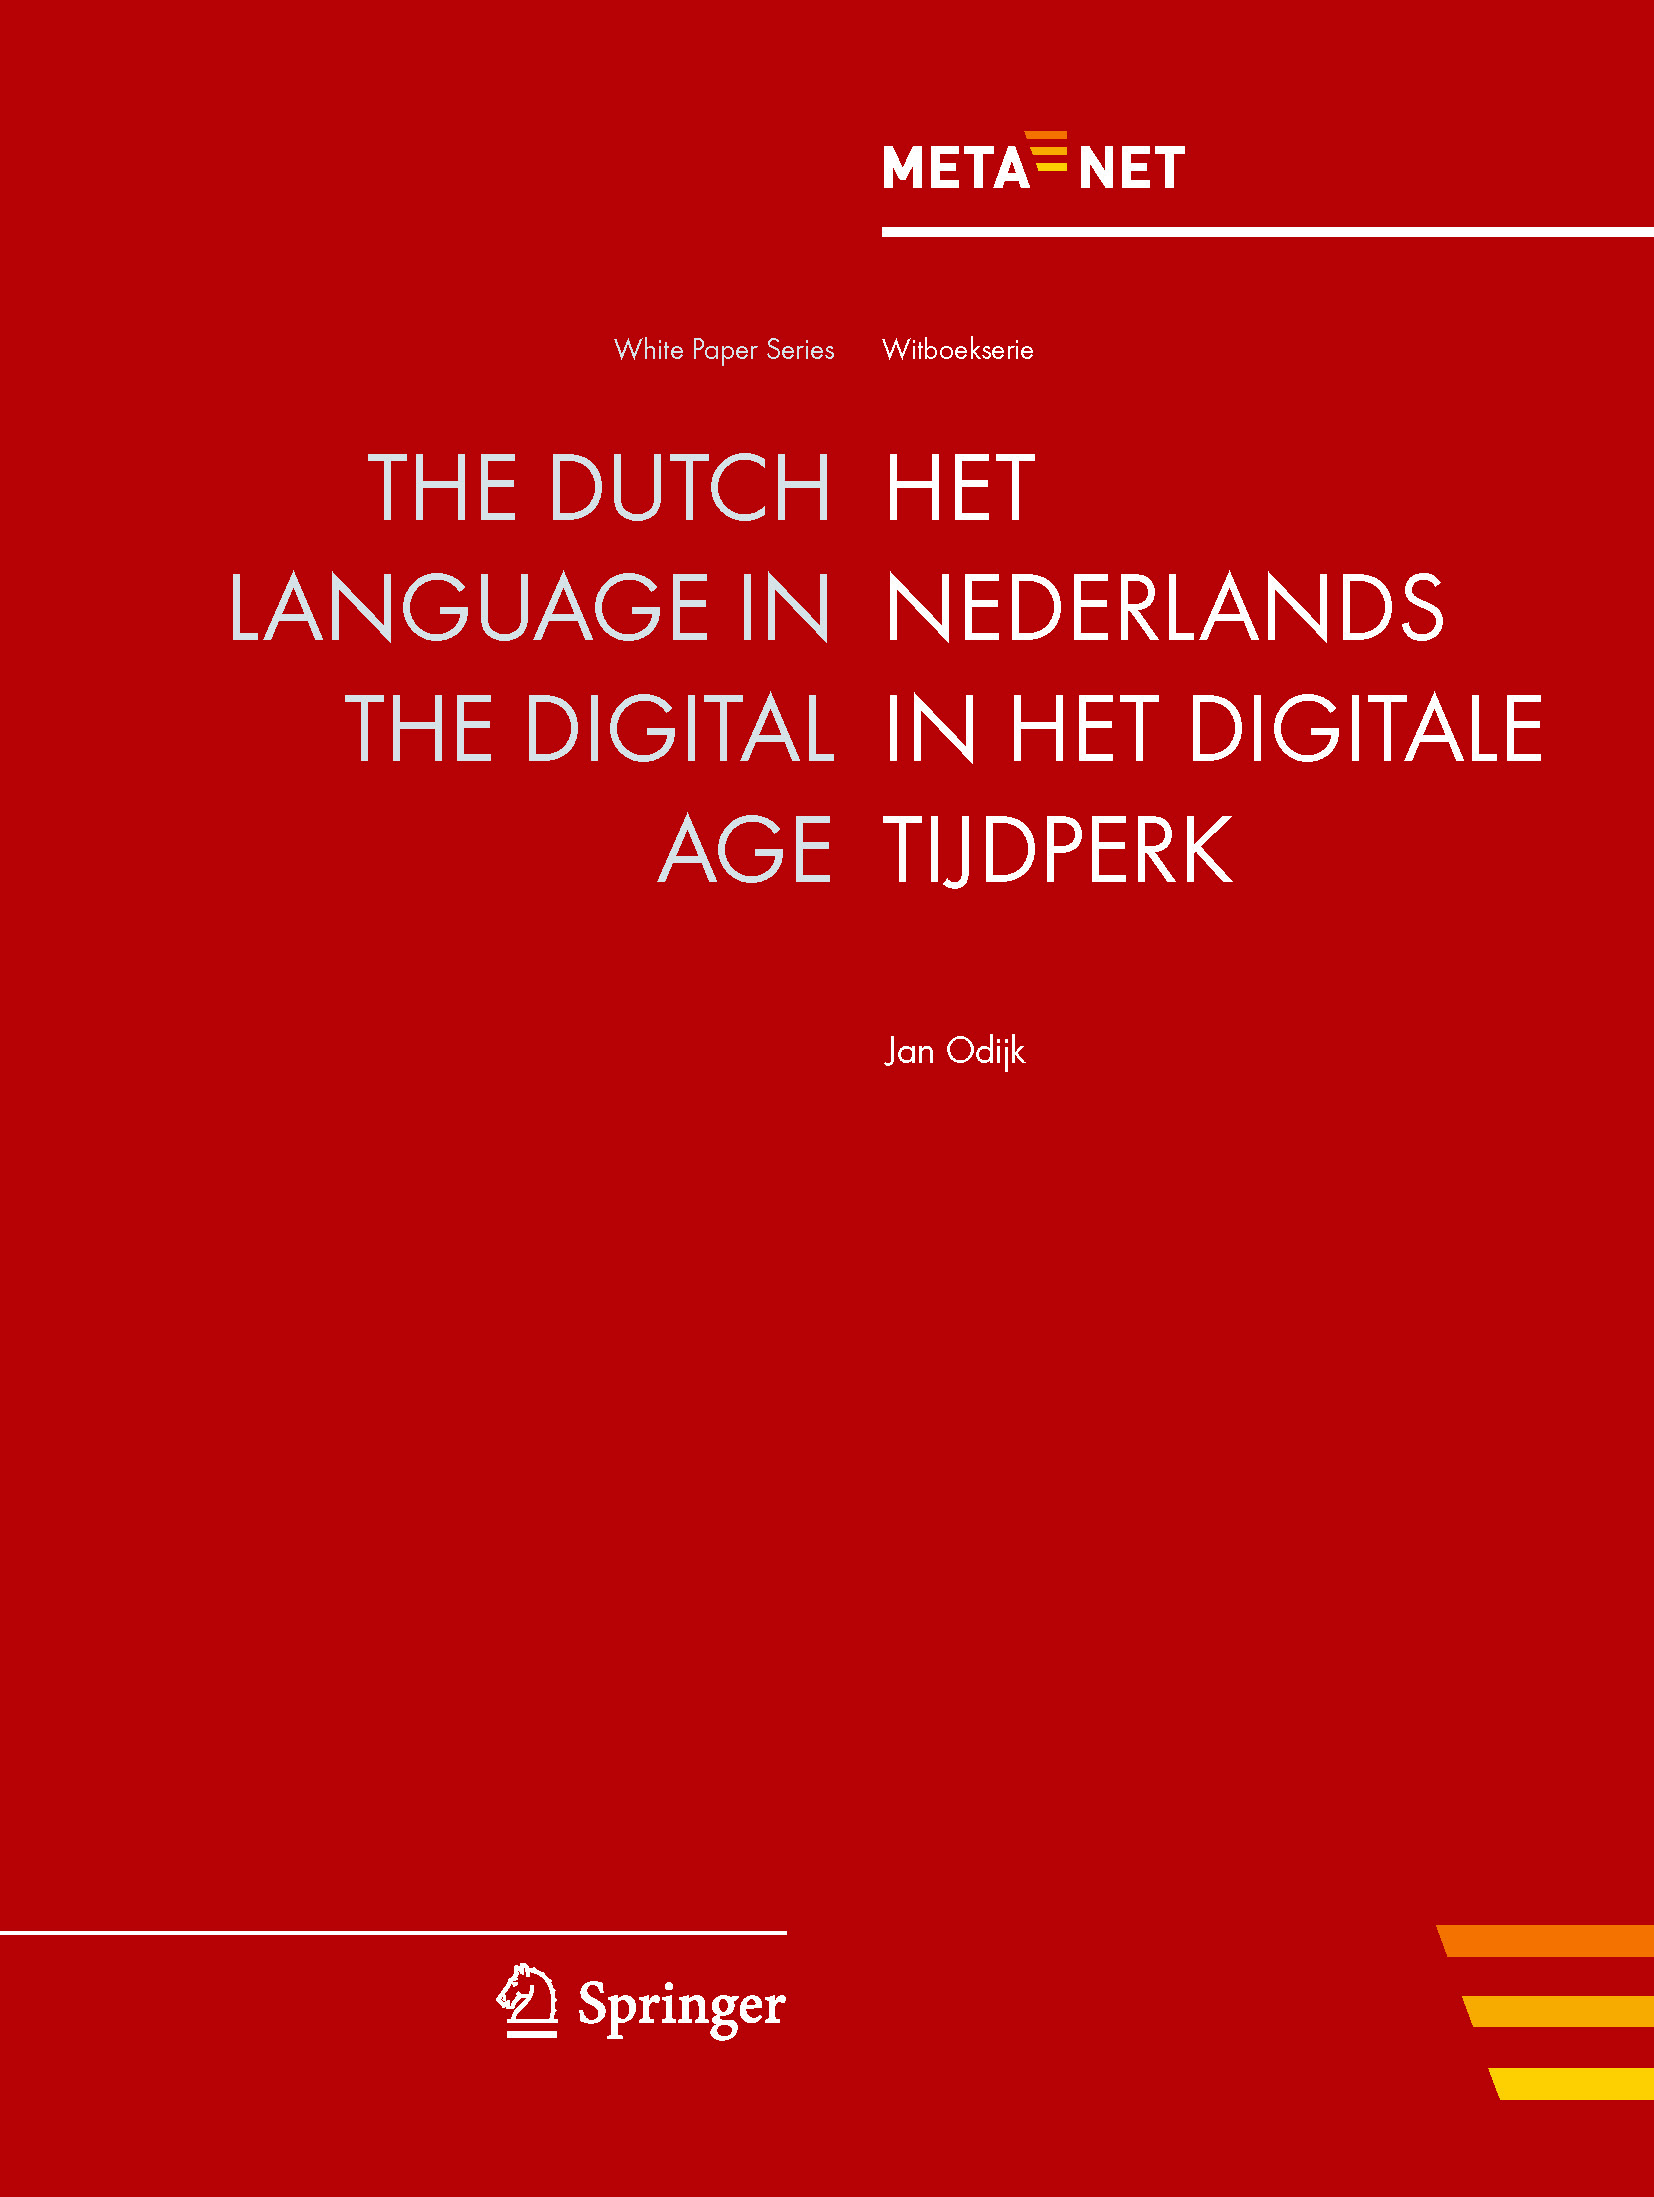 Cover of Dutch whitepaper